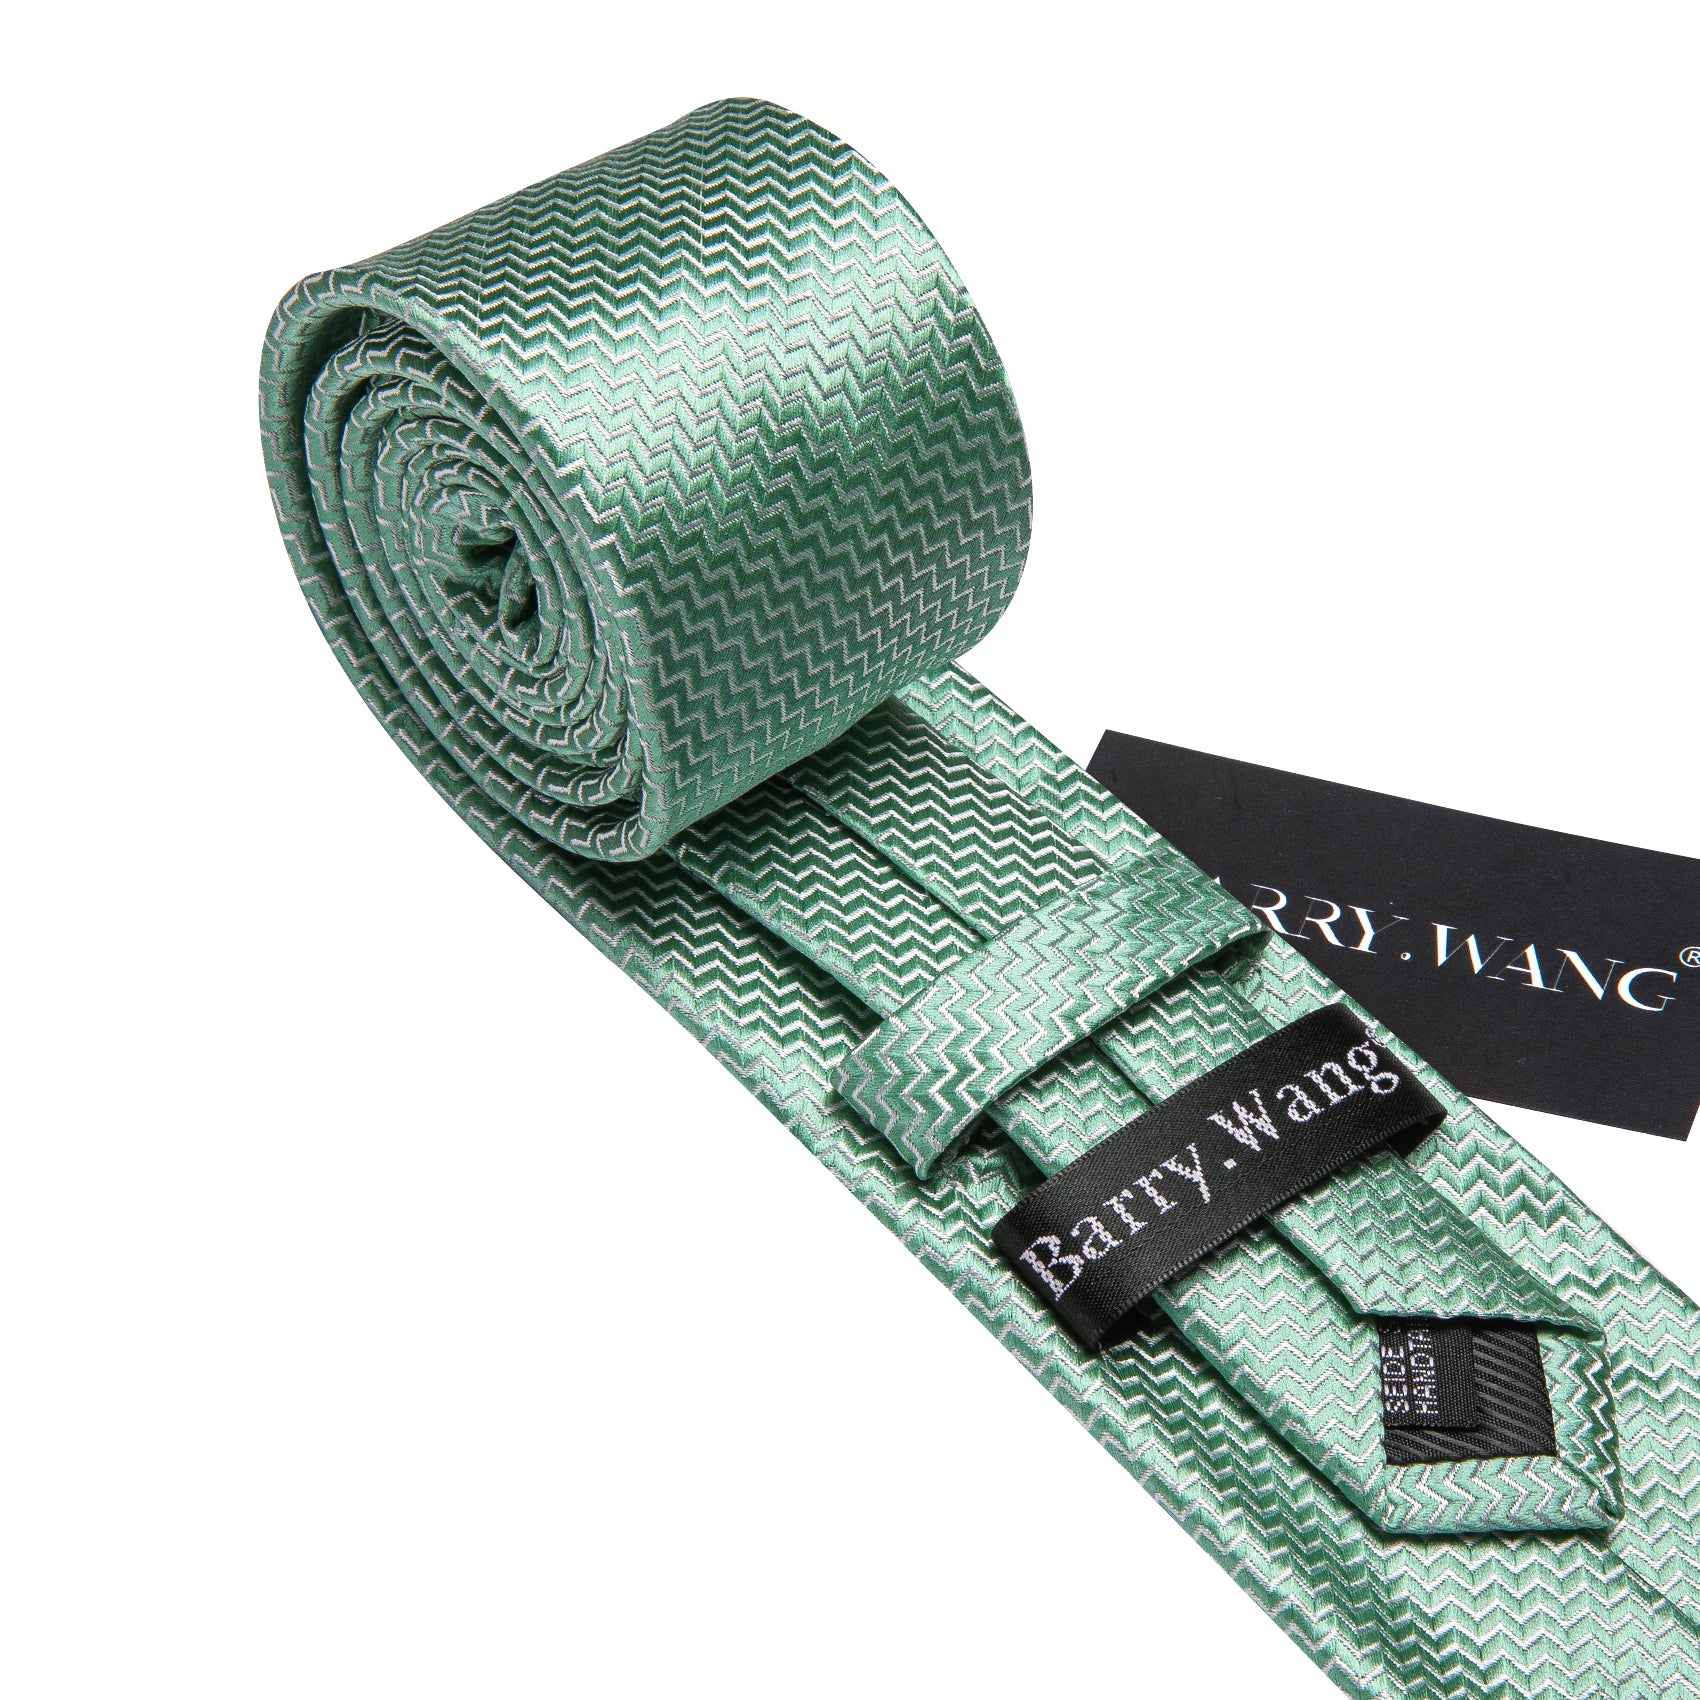 SeaFoam Green Tie Ripple Silk 63 Inches Extra Long Tie Hanky Cufflinks Set